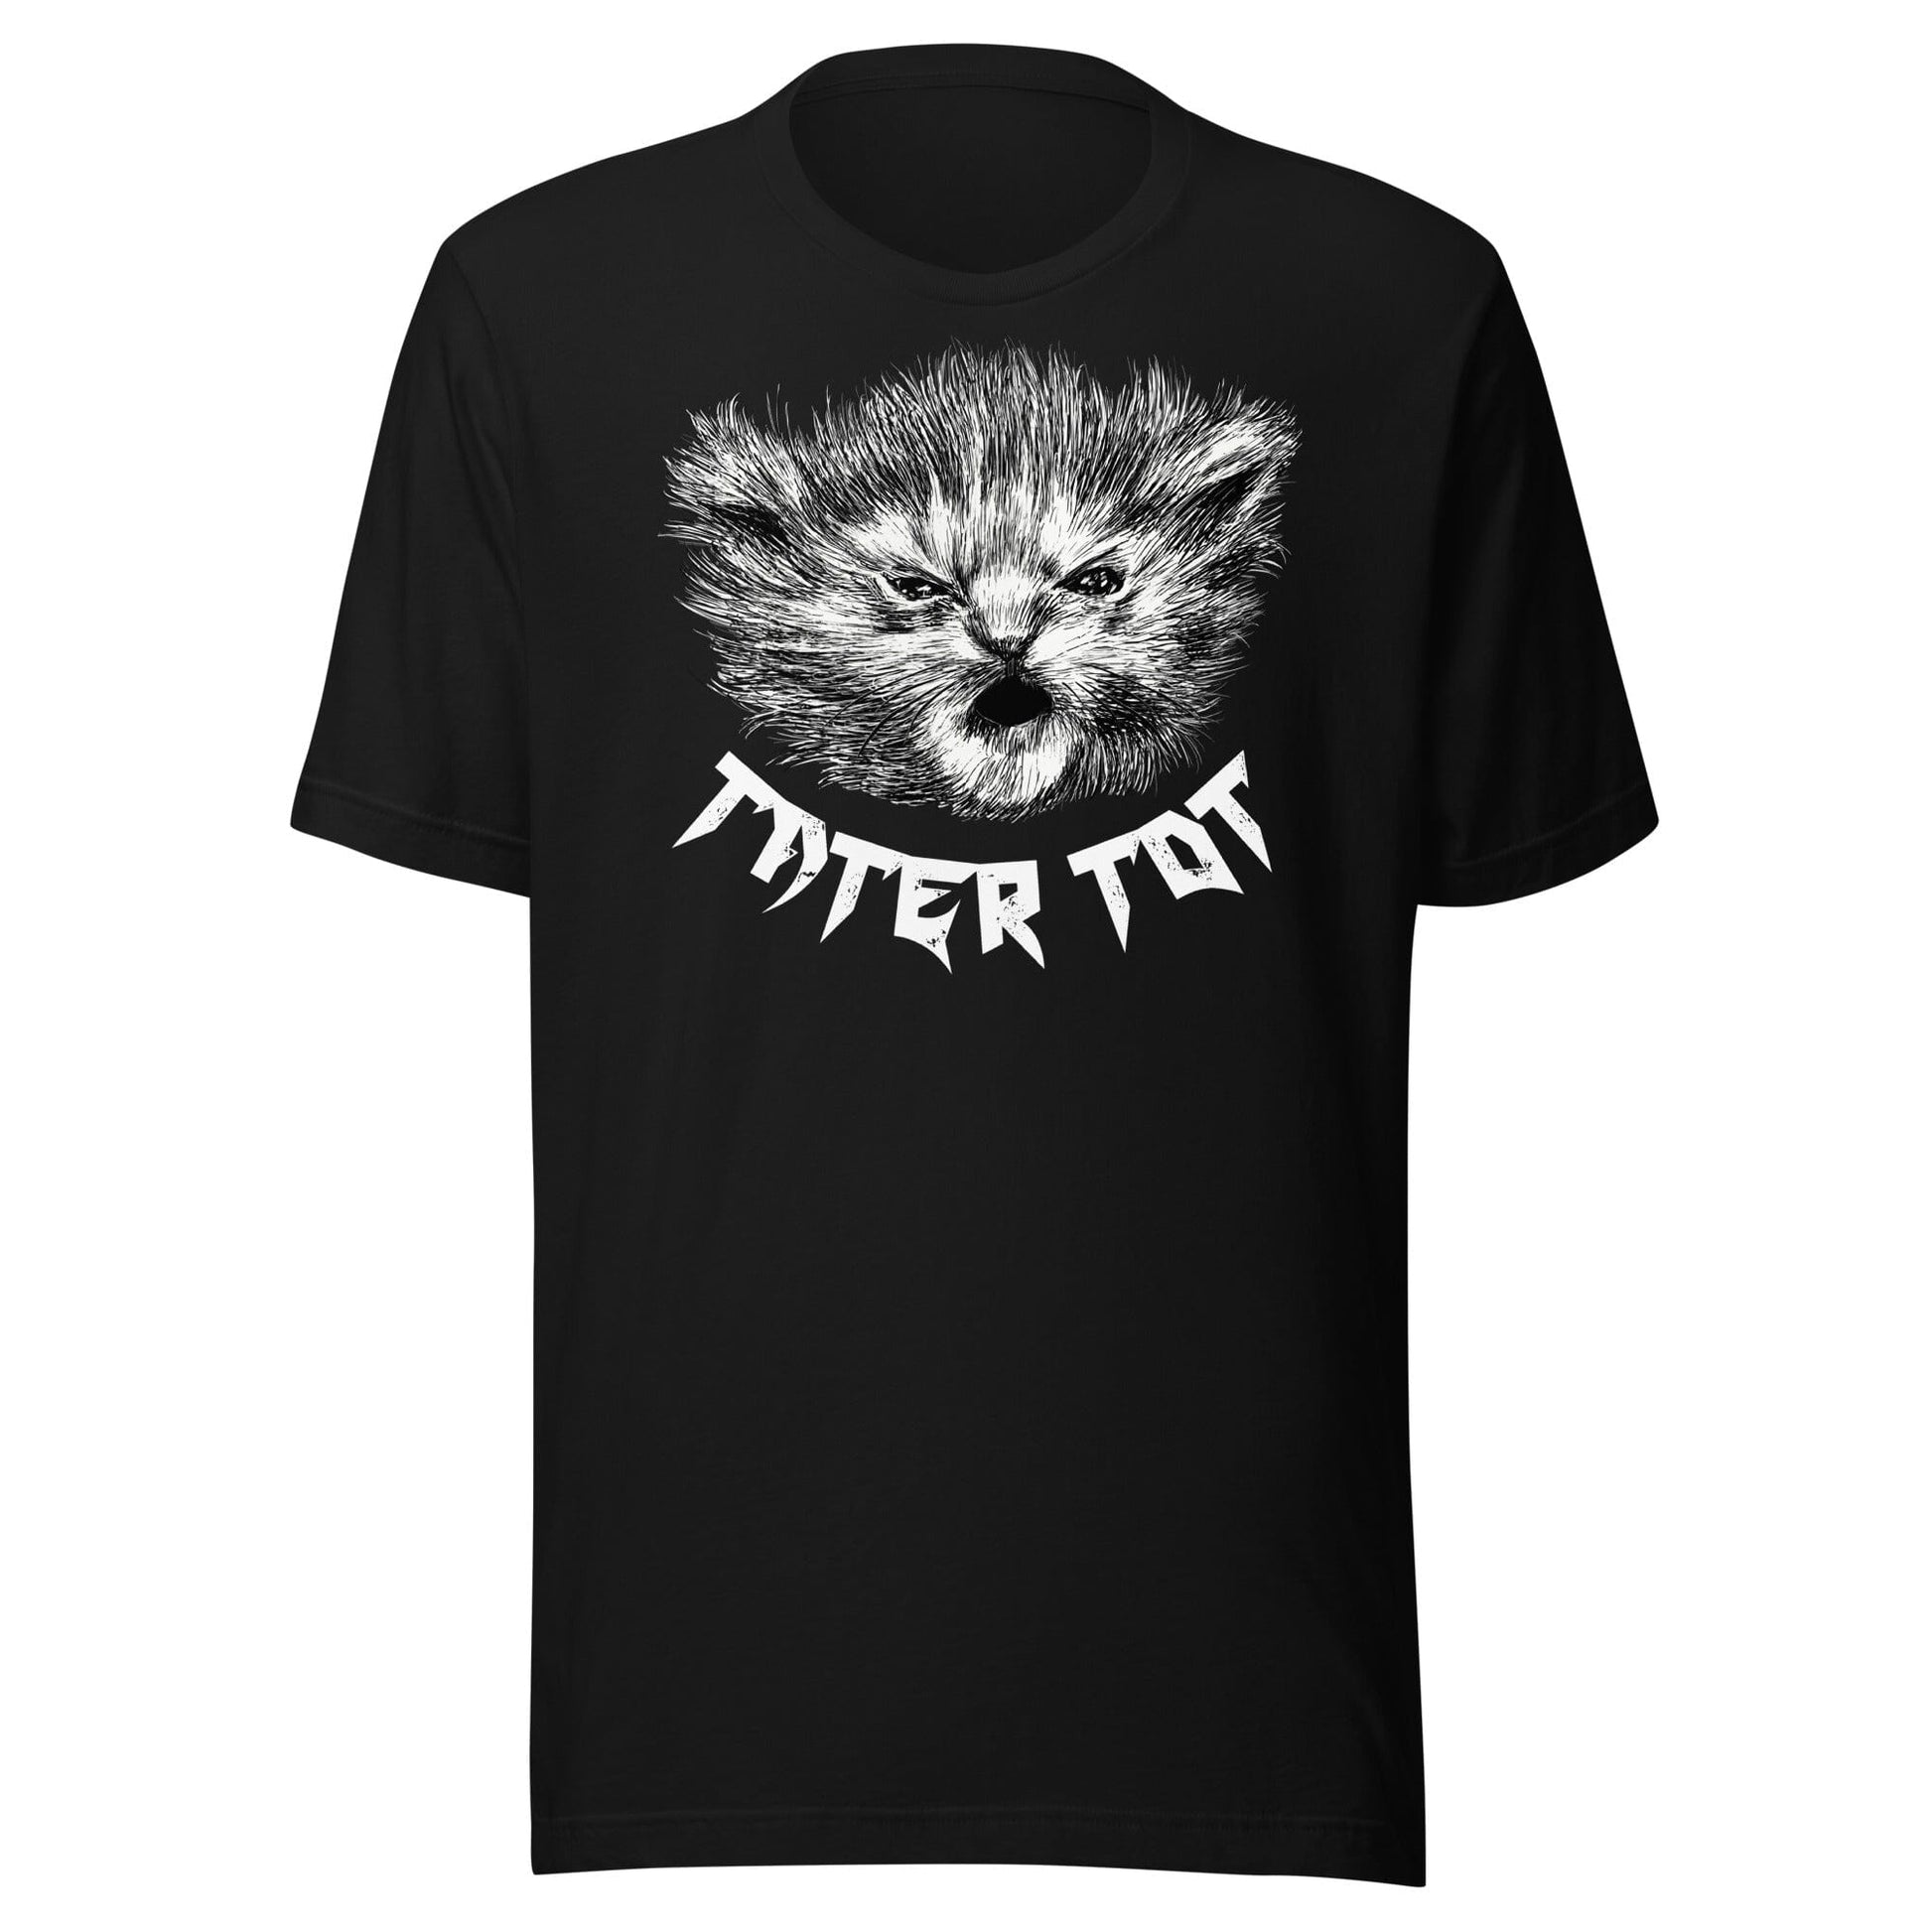 BLACK Metal Tater Tot T-Shirt [Unfoiled] (All net proceeds go to Kitty CrusAIDe) JoyousJoyfulJoyness XS 